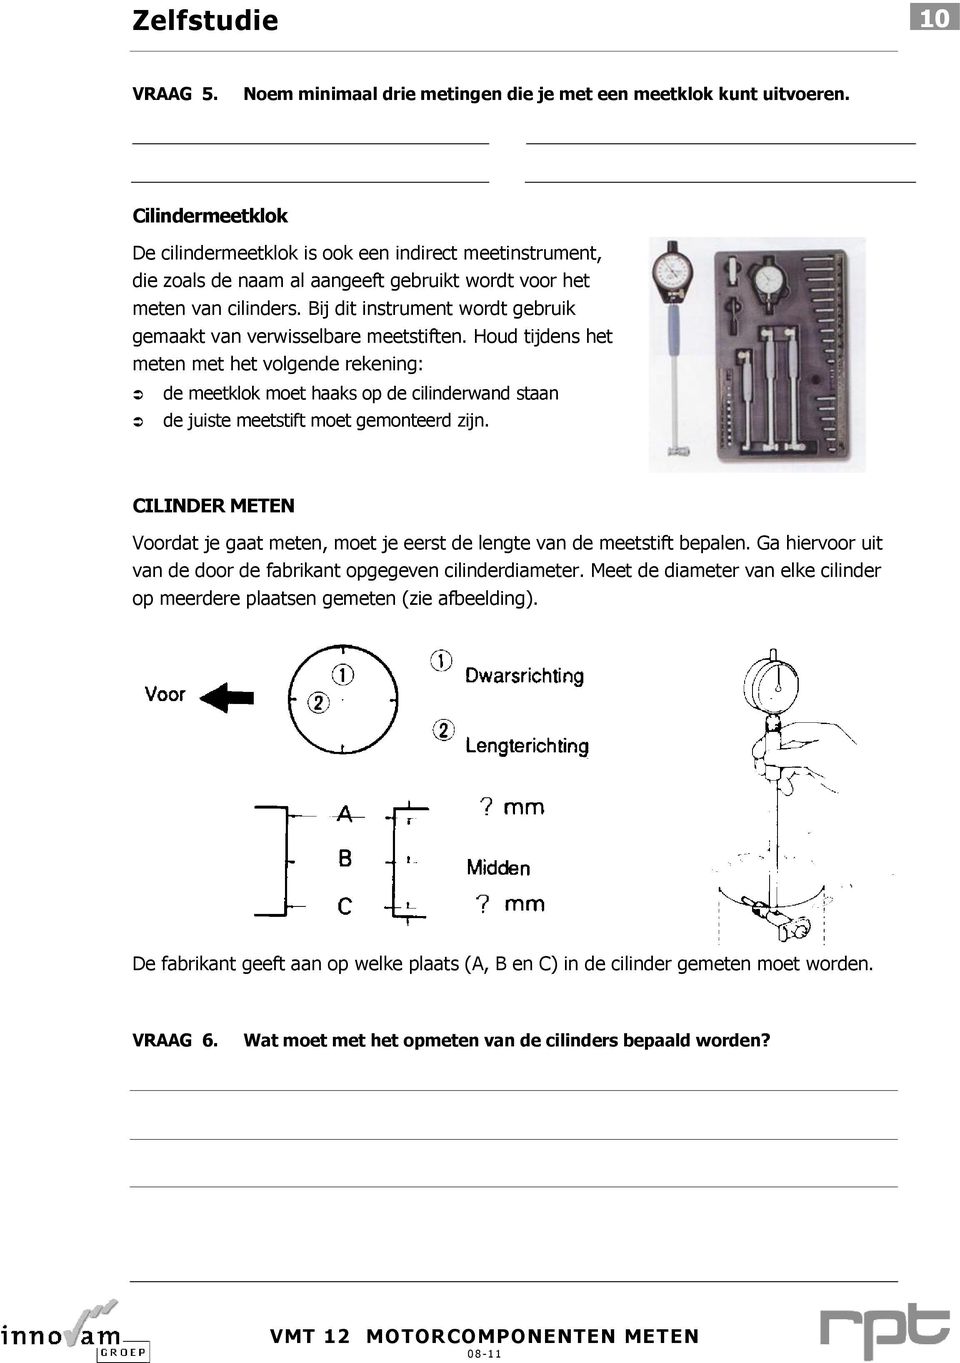 VMT 12 Motorcomponenten meten - PDF Free Download